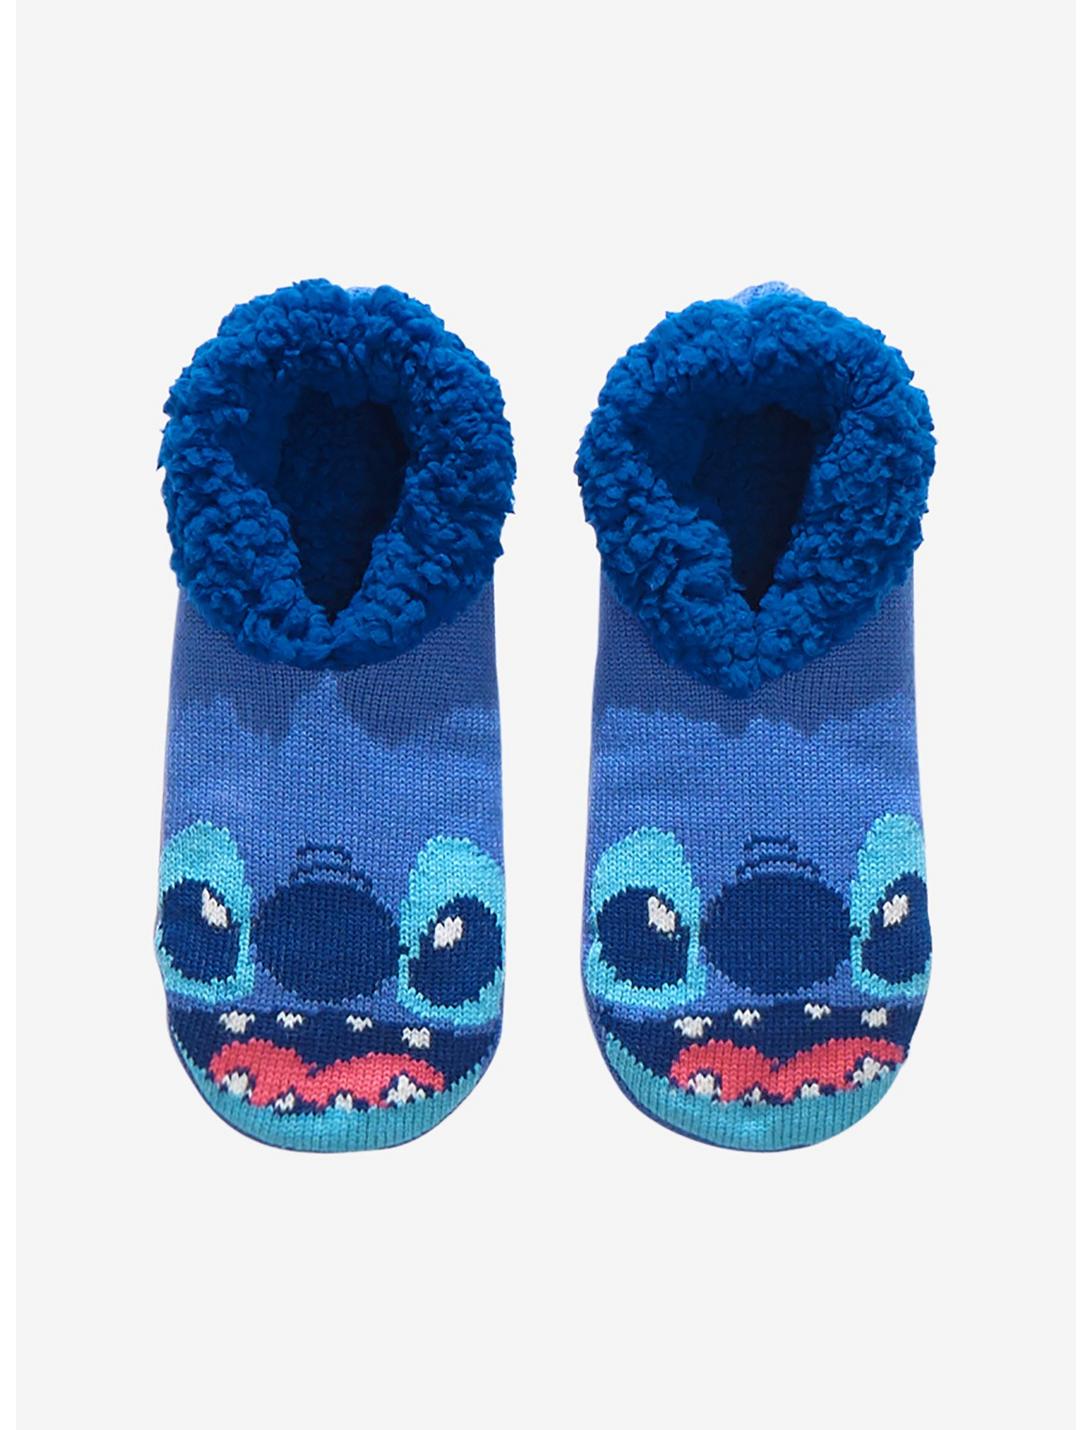 Disney Lilo & Stitch Stitch Character Slipper Socks - BoxLunch Exclusive, , hi-res